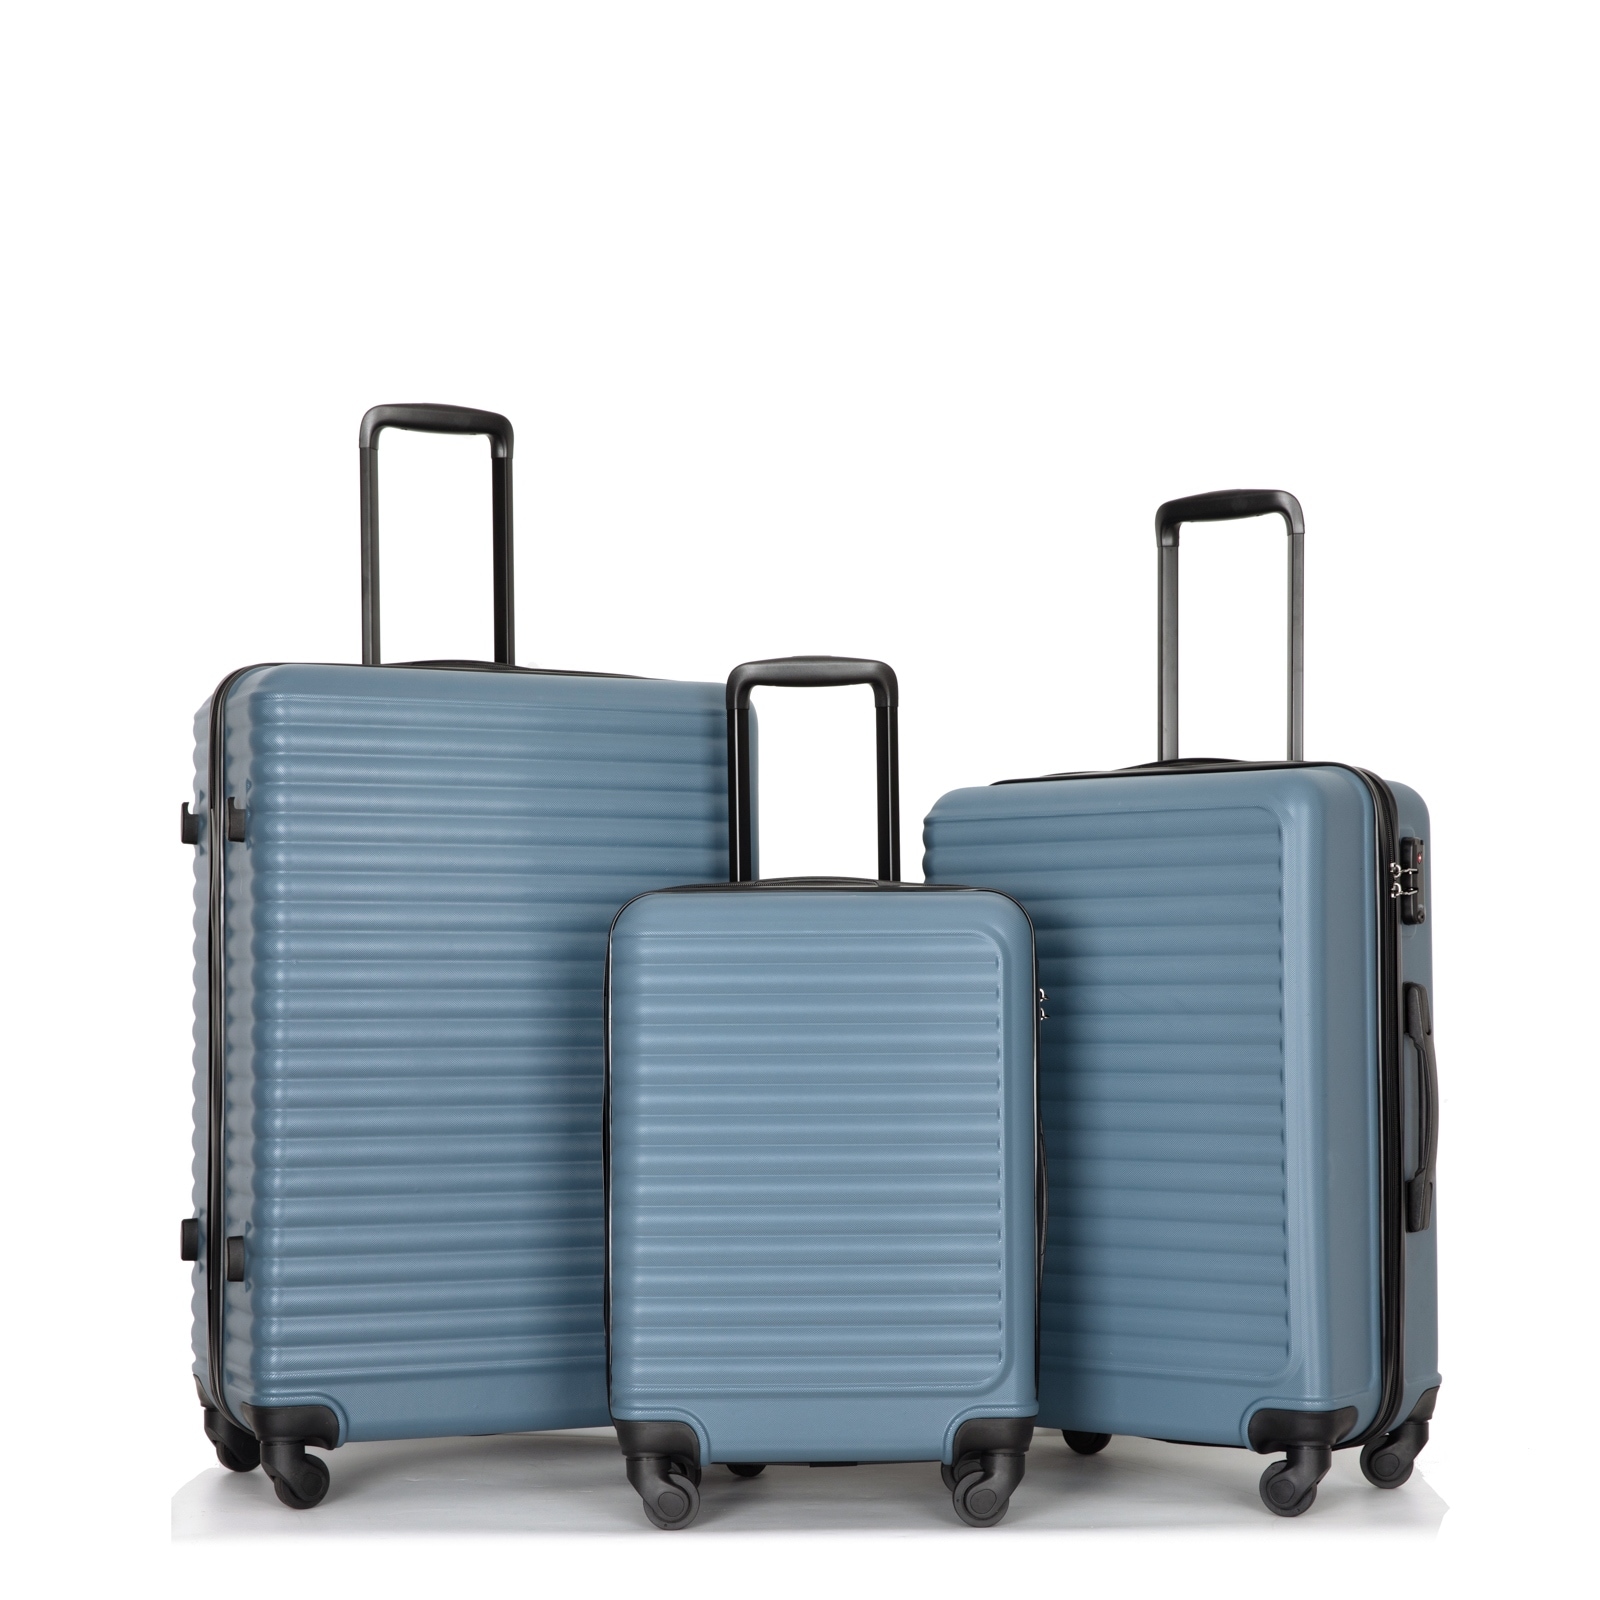 LARVENDER Luggage Sets 5 Piece, Expandable Luggage Set Clearance for Women,  Suitcases with Wheels, Hardside Hard Shell Travel Luggage with TSA Lock